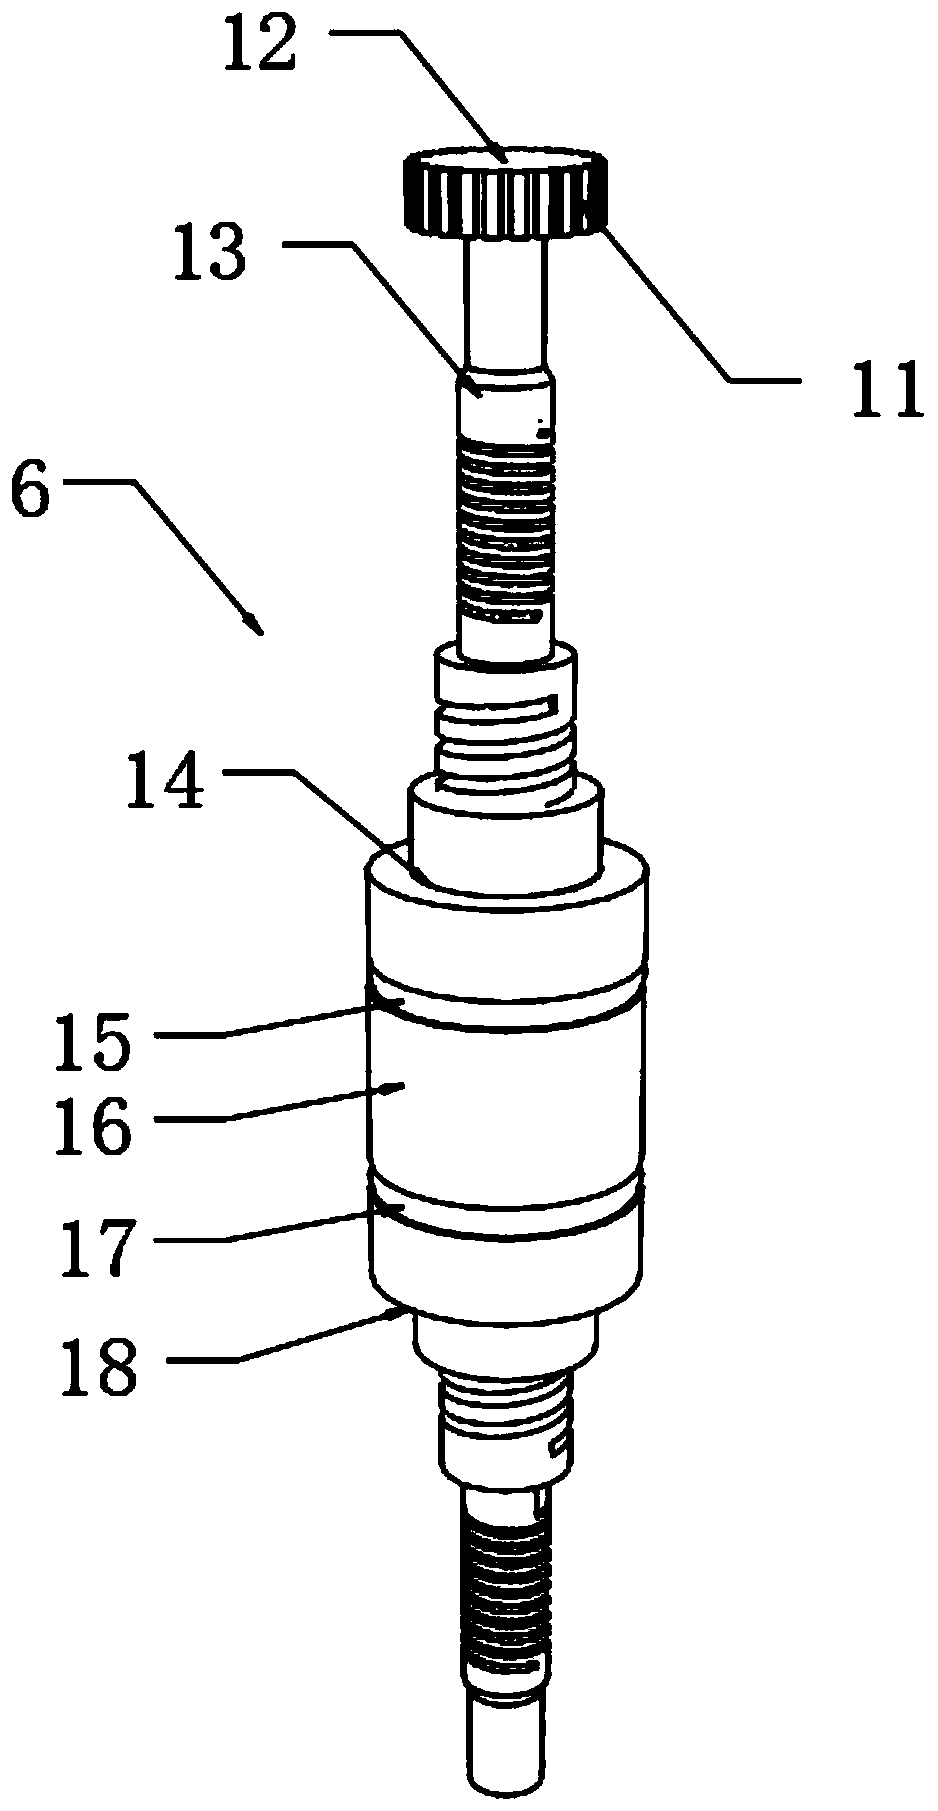 Double-oil seal speed regulating valve